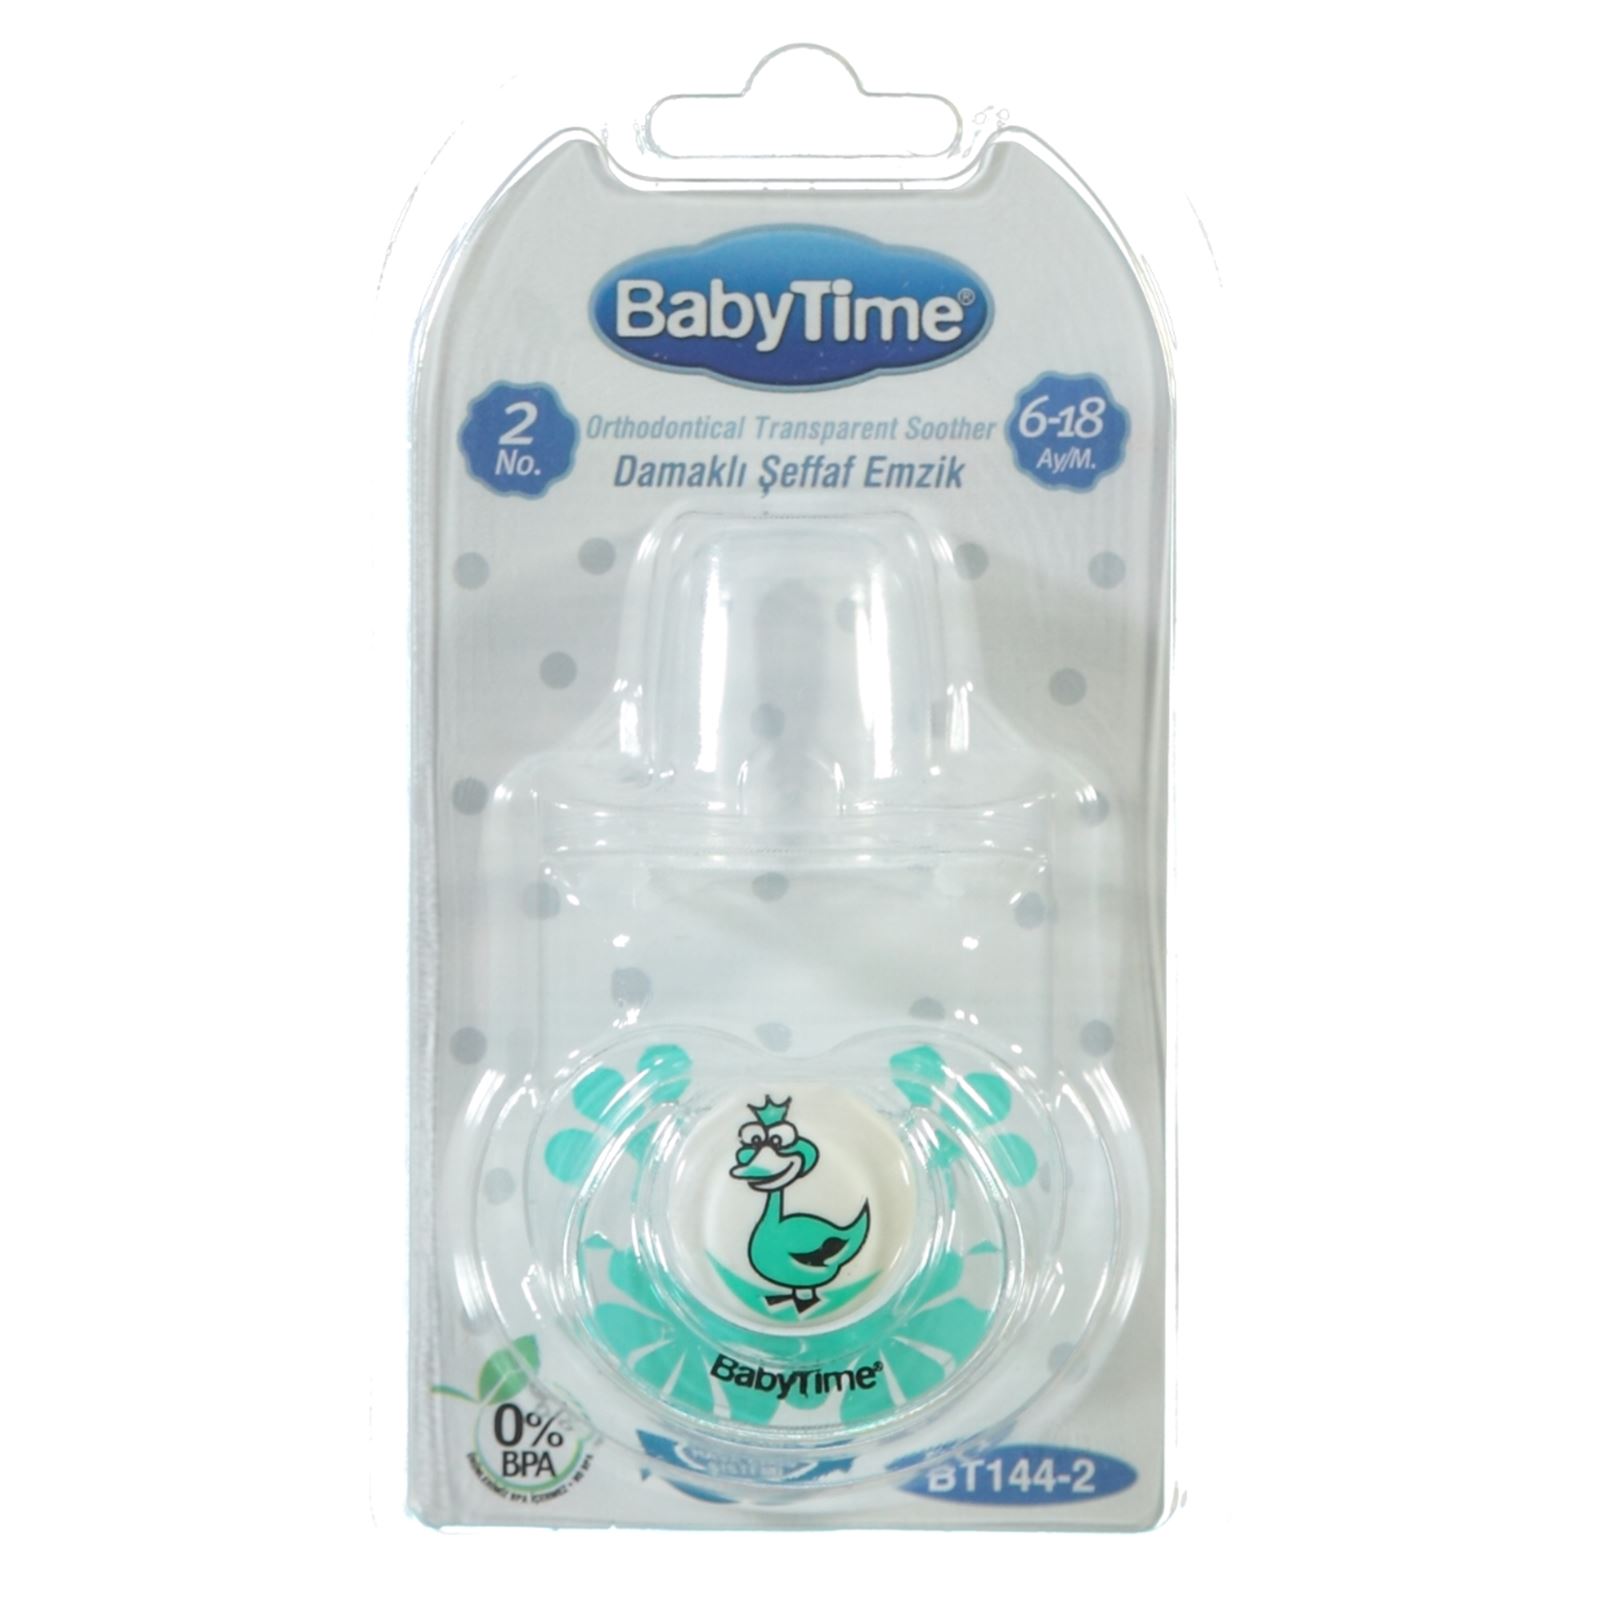 BabyTime Damaklı Silikon Desenli Emzik 6-18 Ay Mint Yeşili